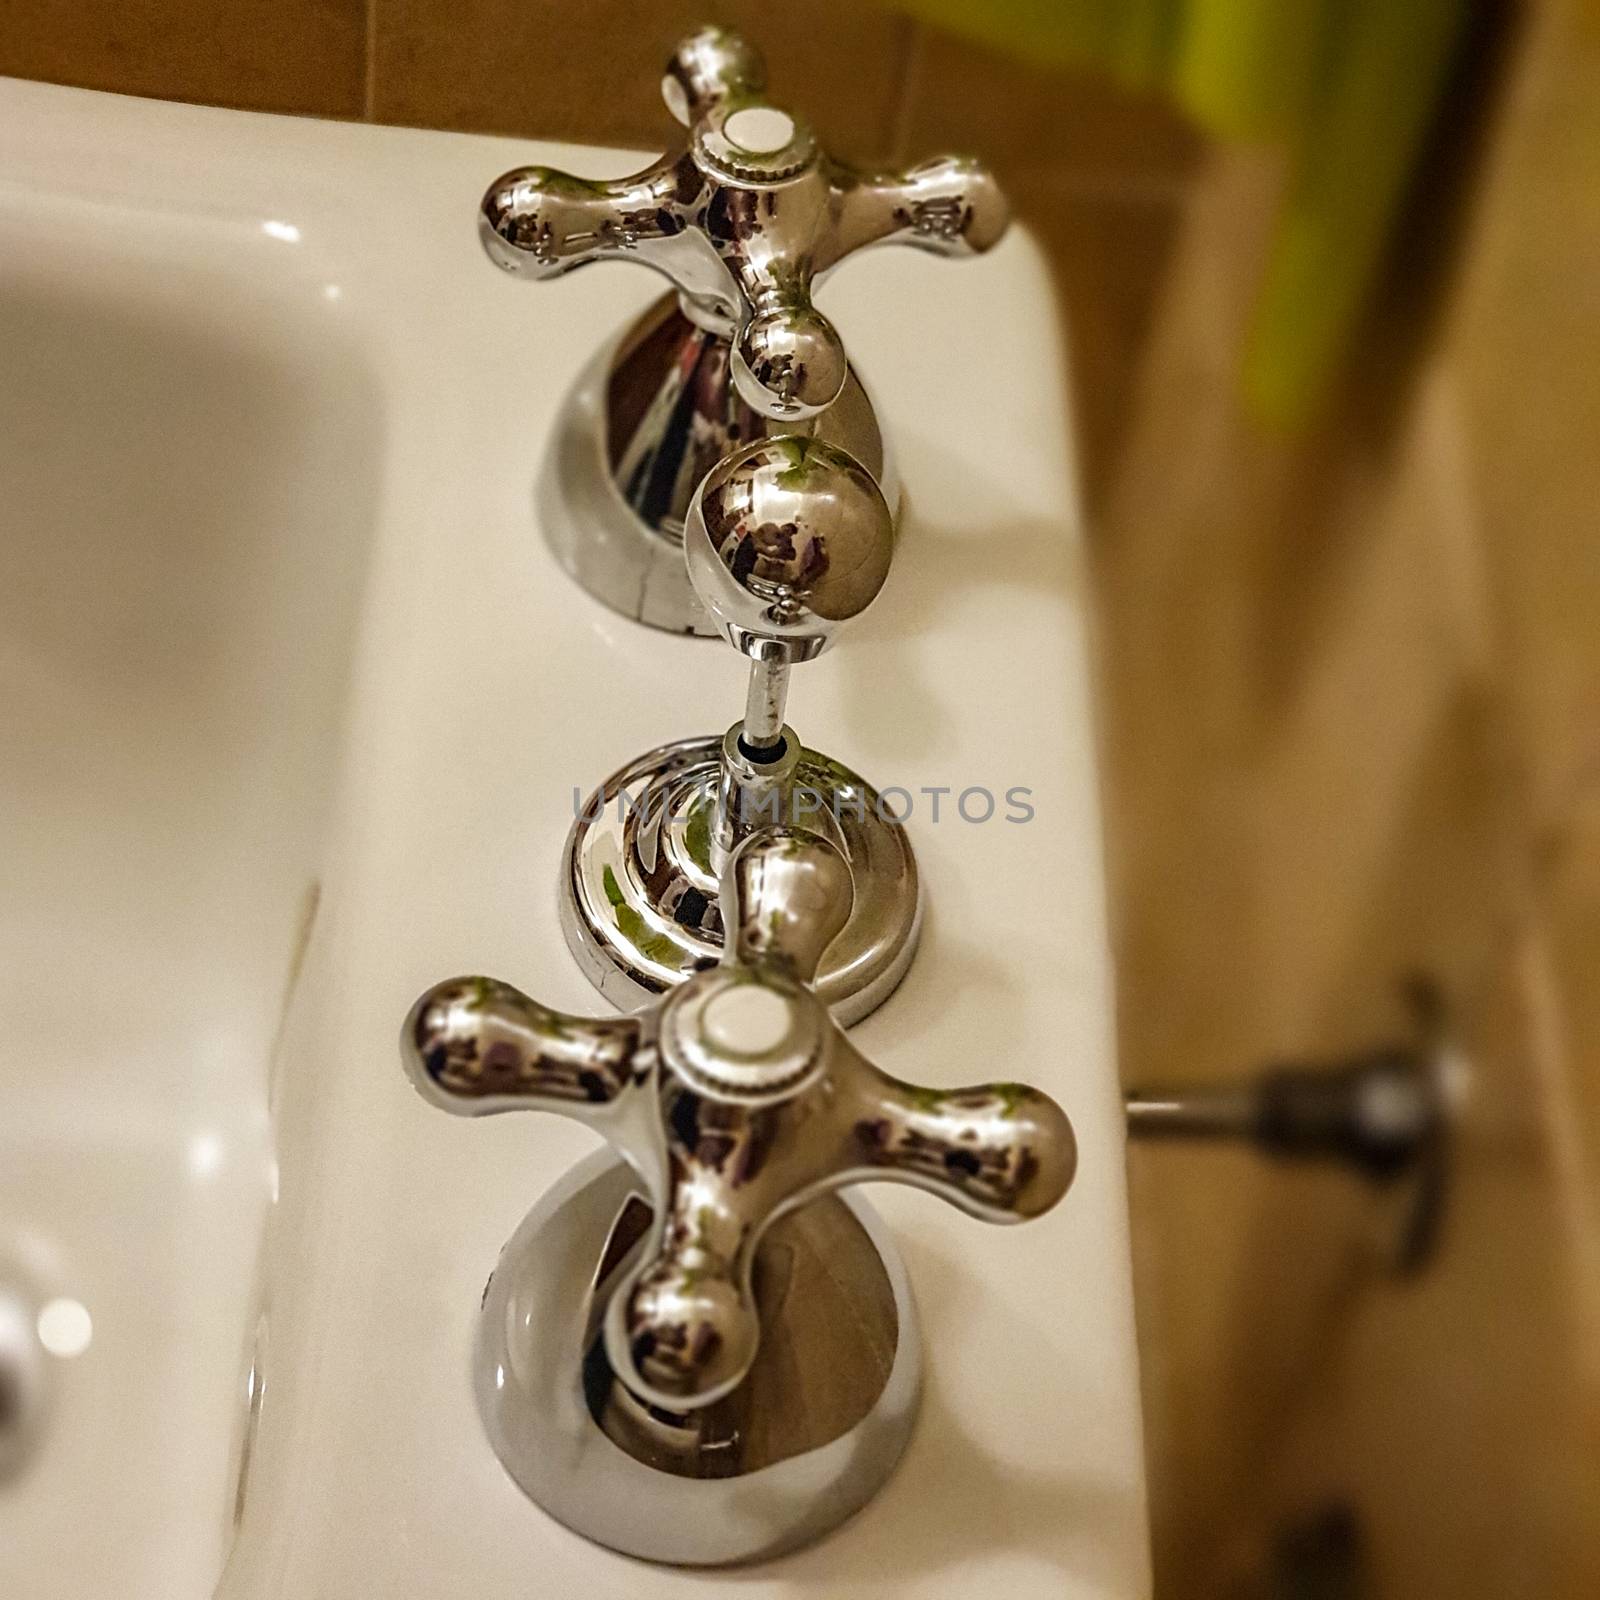 sanitary taps by carfedeph